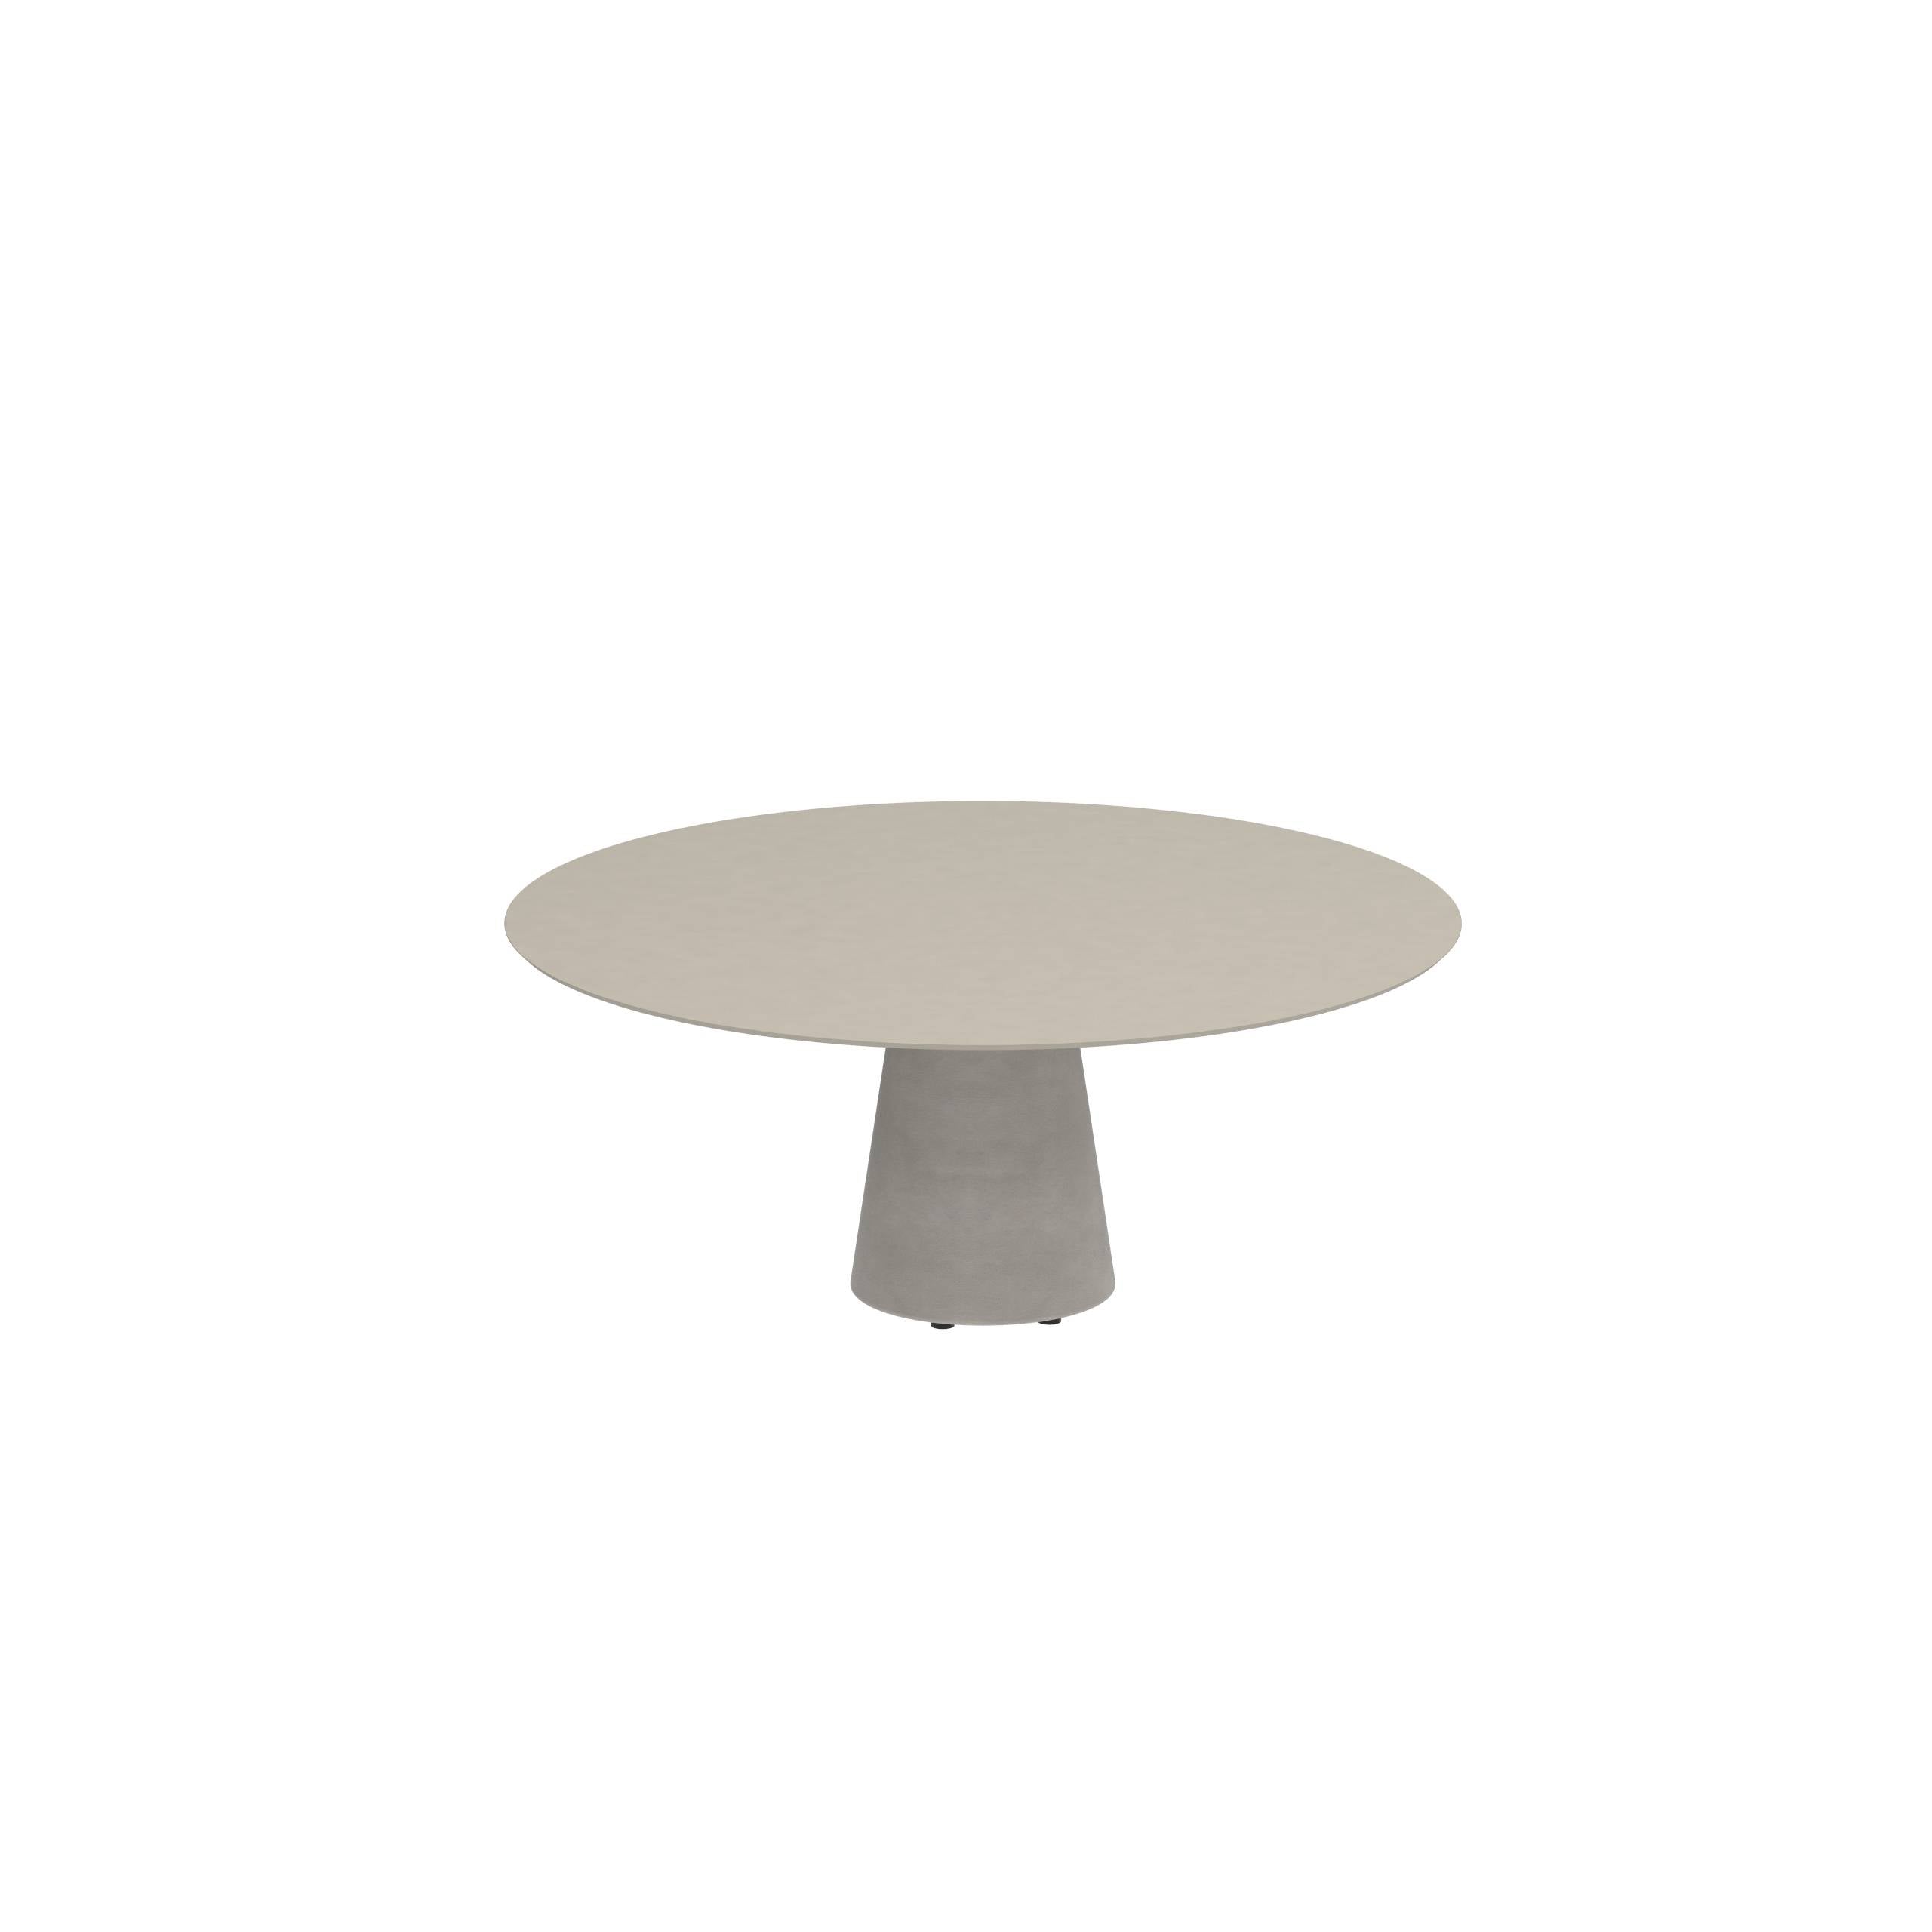 Conix Table Round Ø 160cm Low Dining Leg Concrete Cement Grey - Tabletop Ceramic Pearl Grey